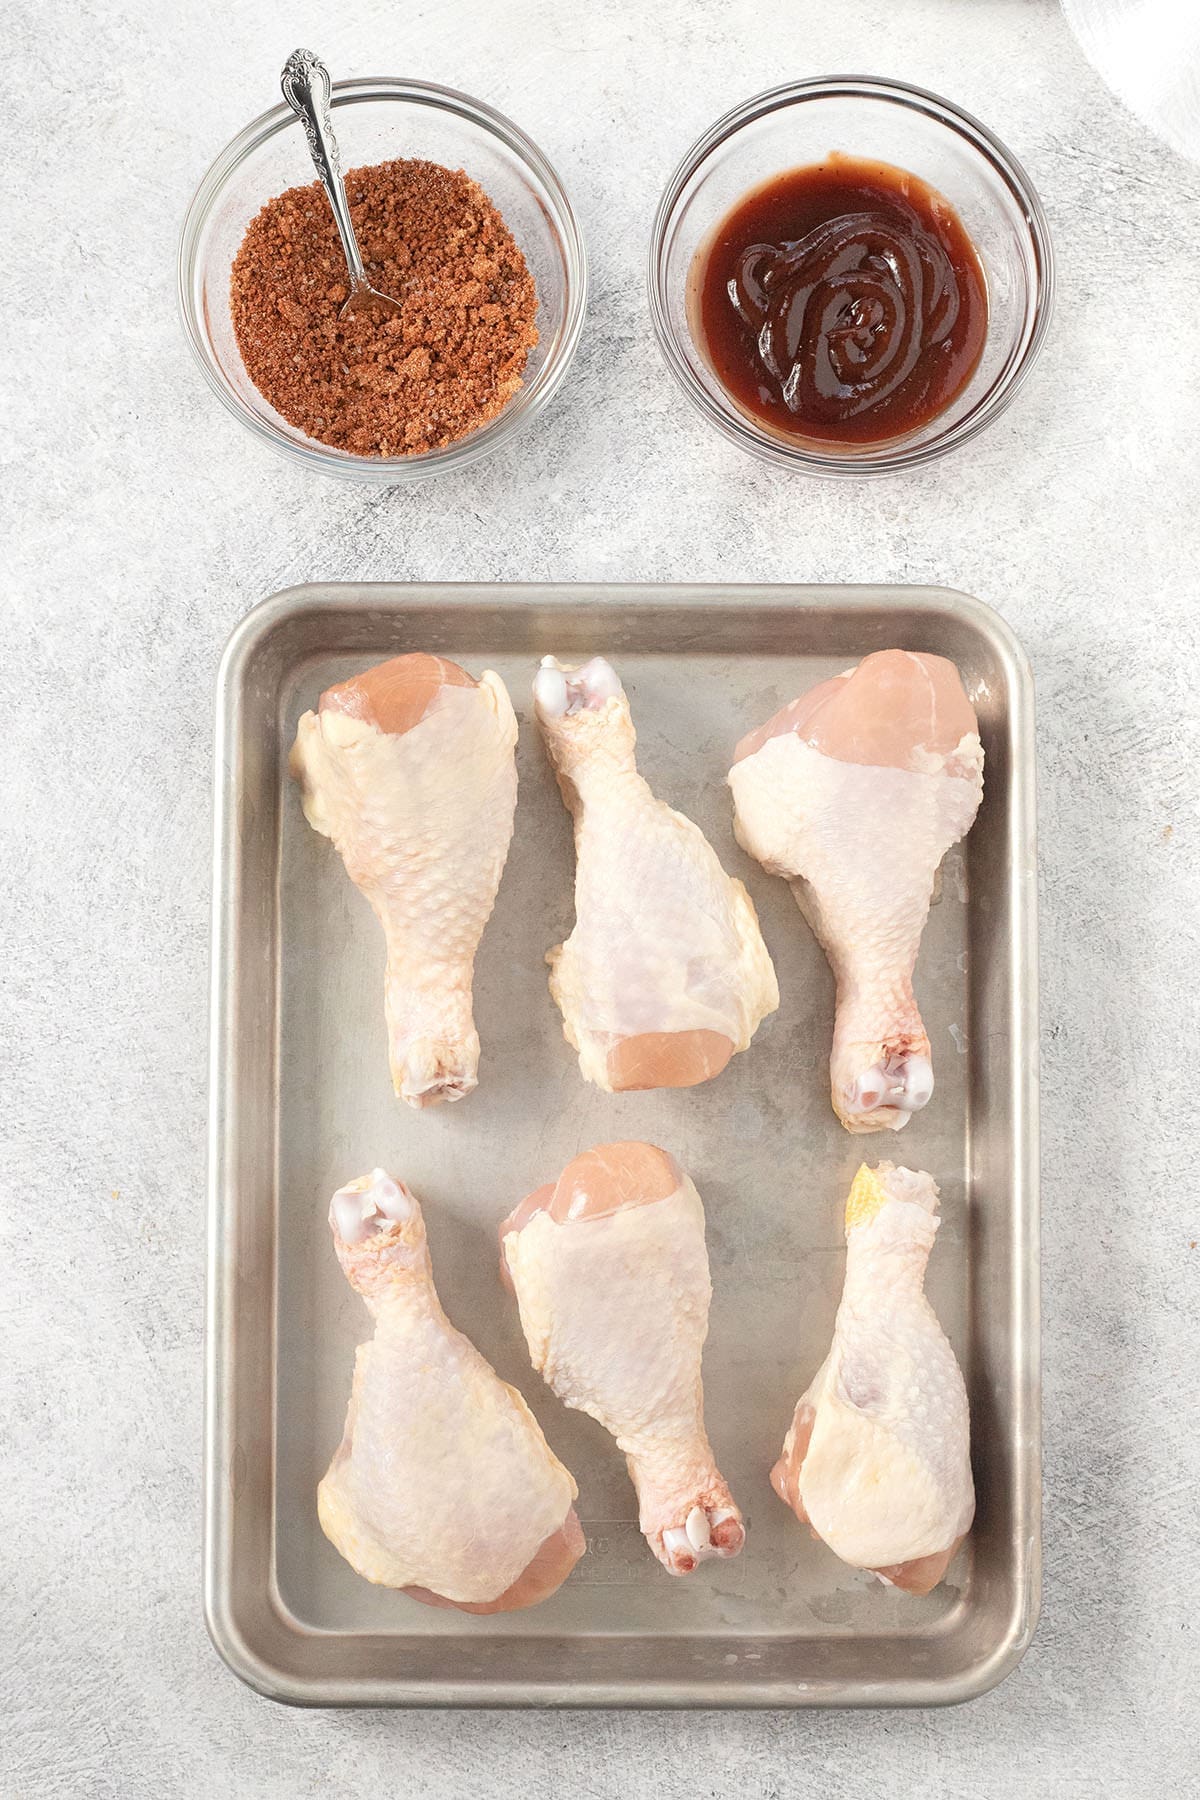 Raw poultry legs on a baking sheet.